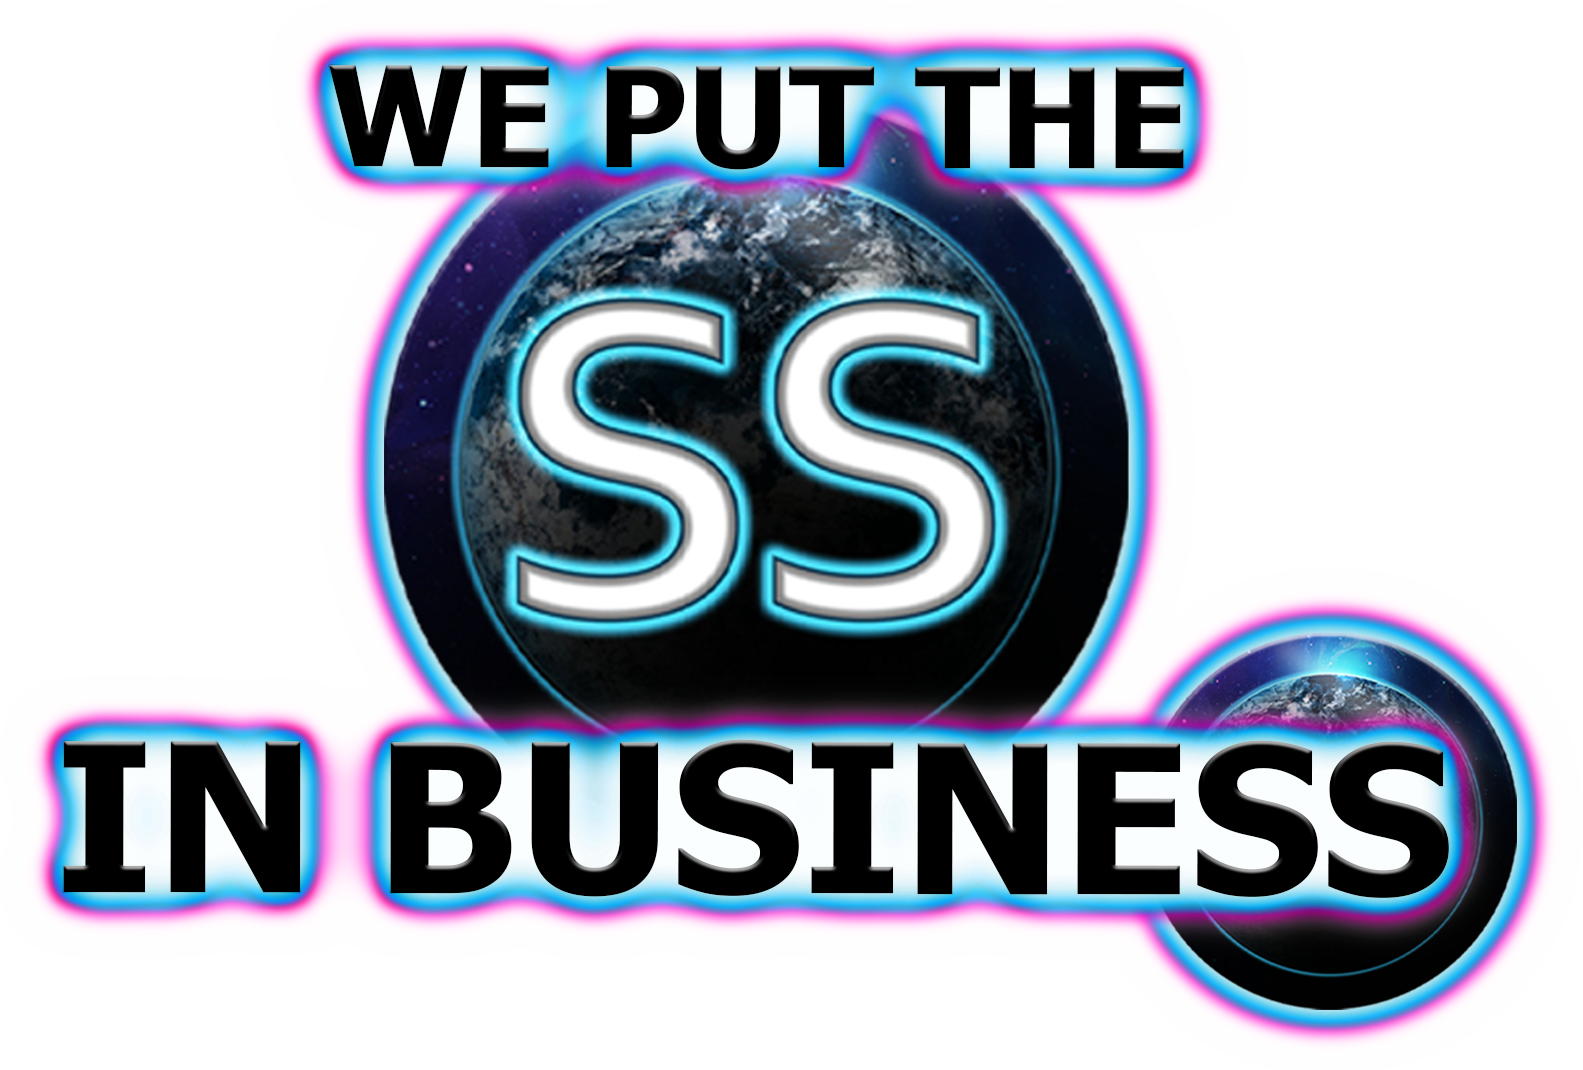 digital design services in houston texas skyshot digital design, website, online marketing, web content, print design, business Your business reborn 3.3